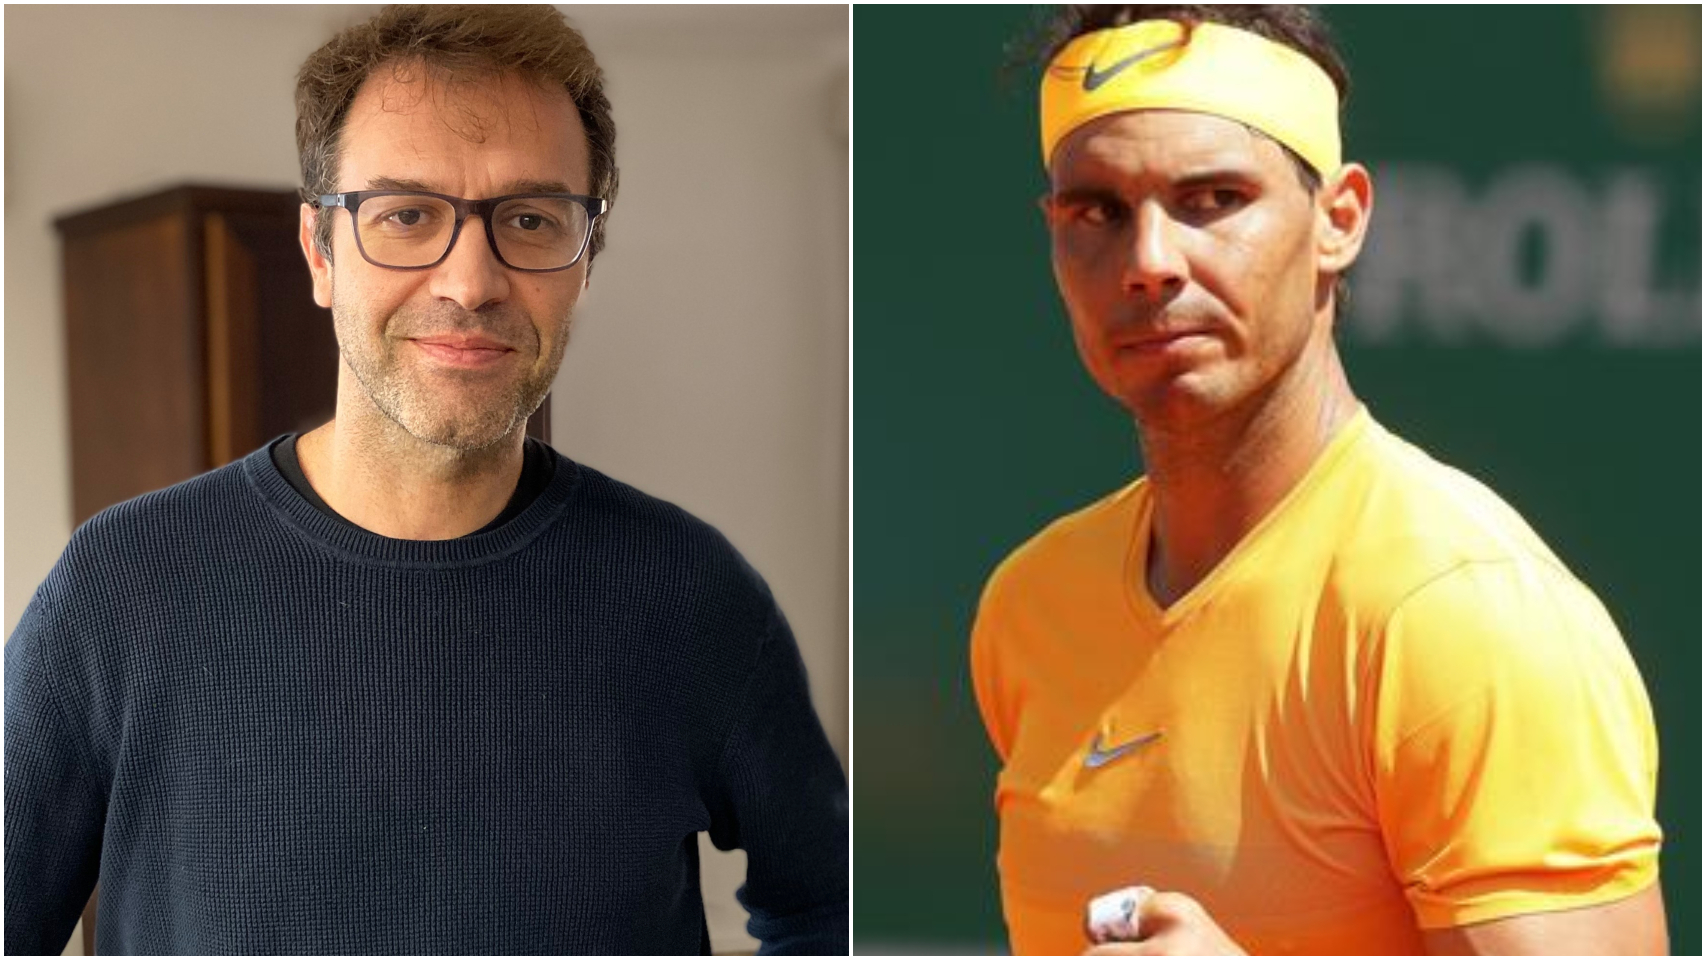 A la izquierda el alcalde de Manacor Miquel Oliver. A la derecha, el tenista Rafael Nadal.